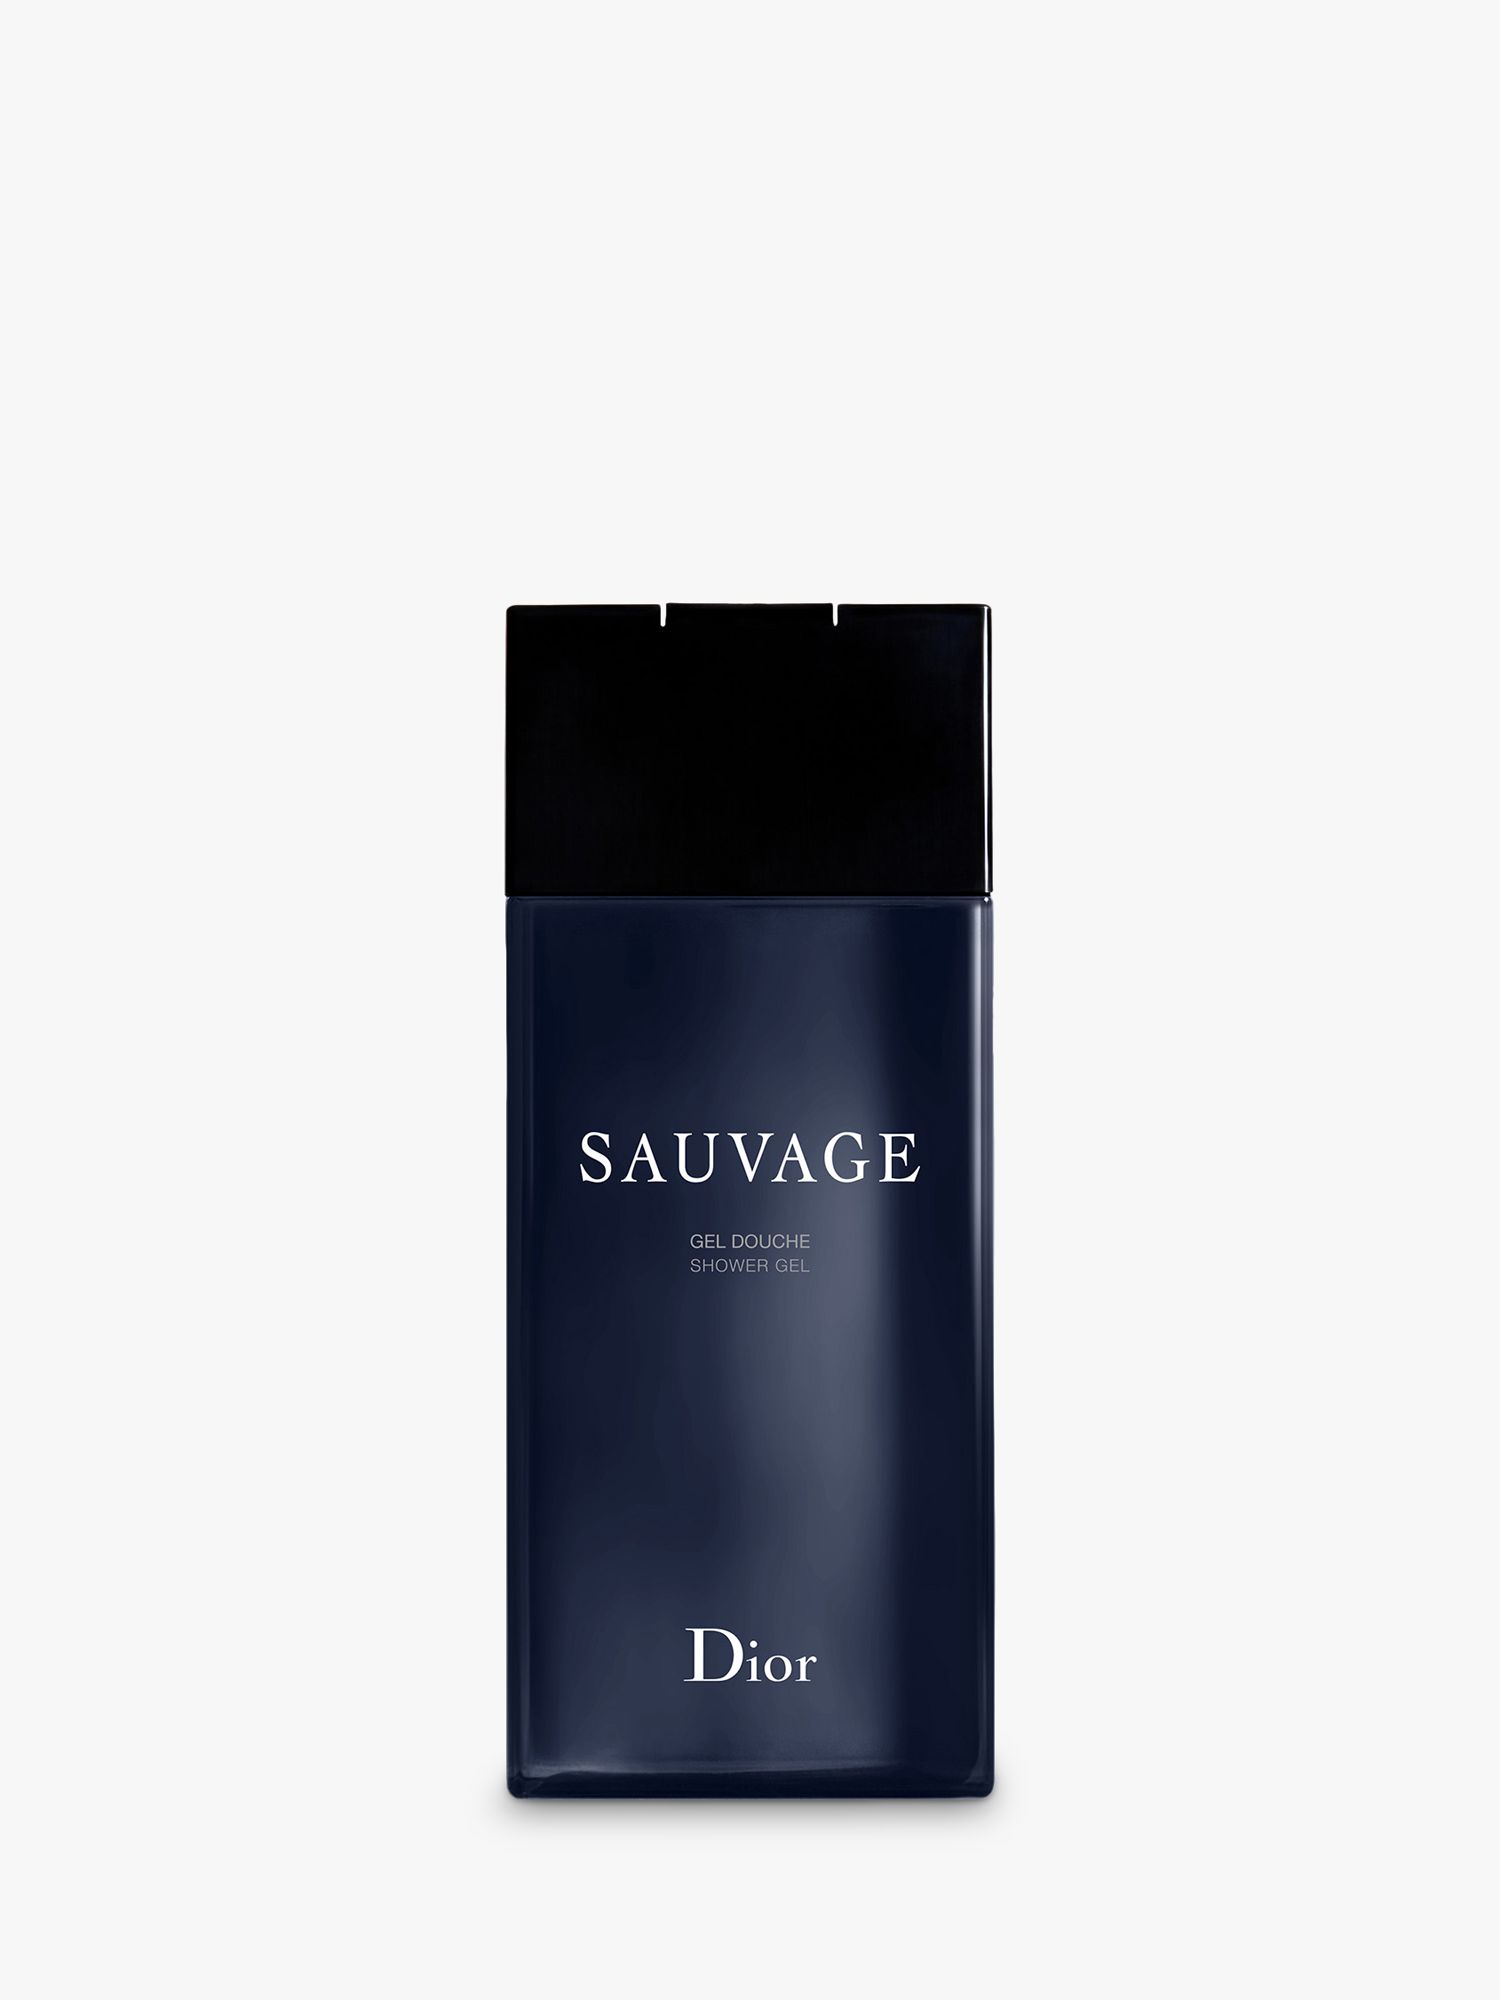 Dior Sauvage Shower Gel, 200ml at John 